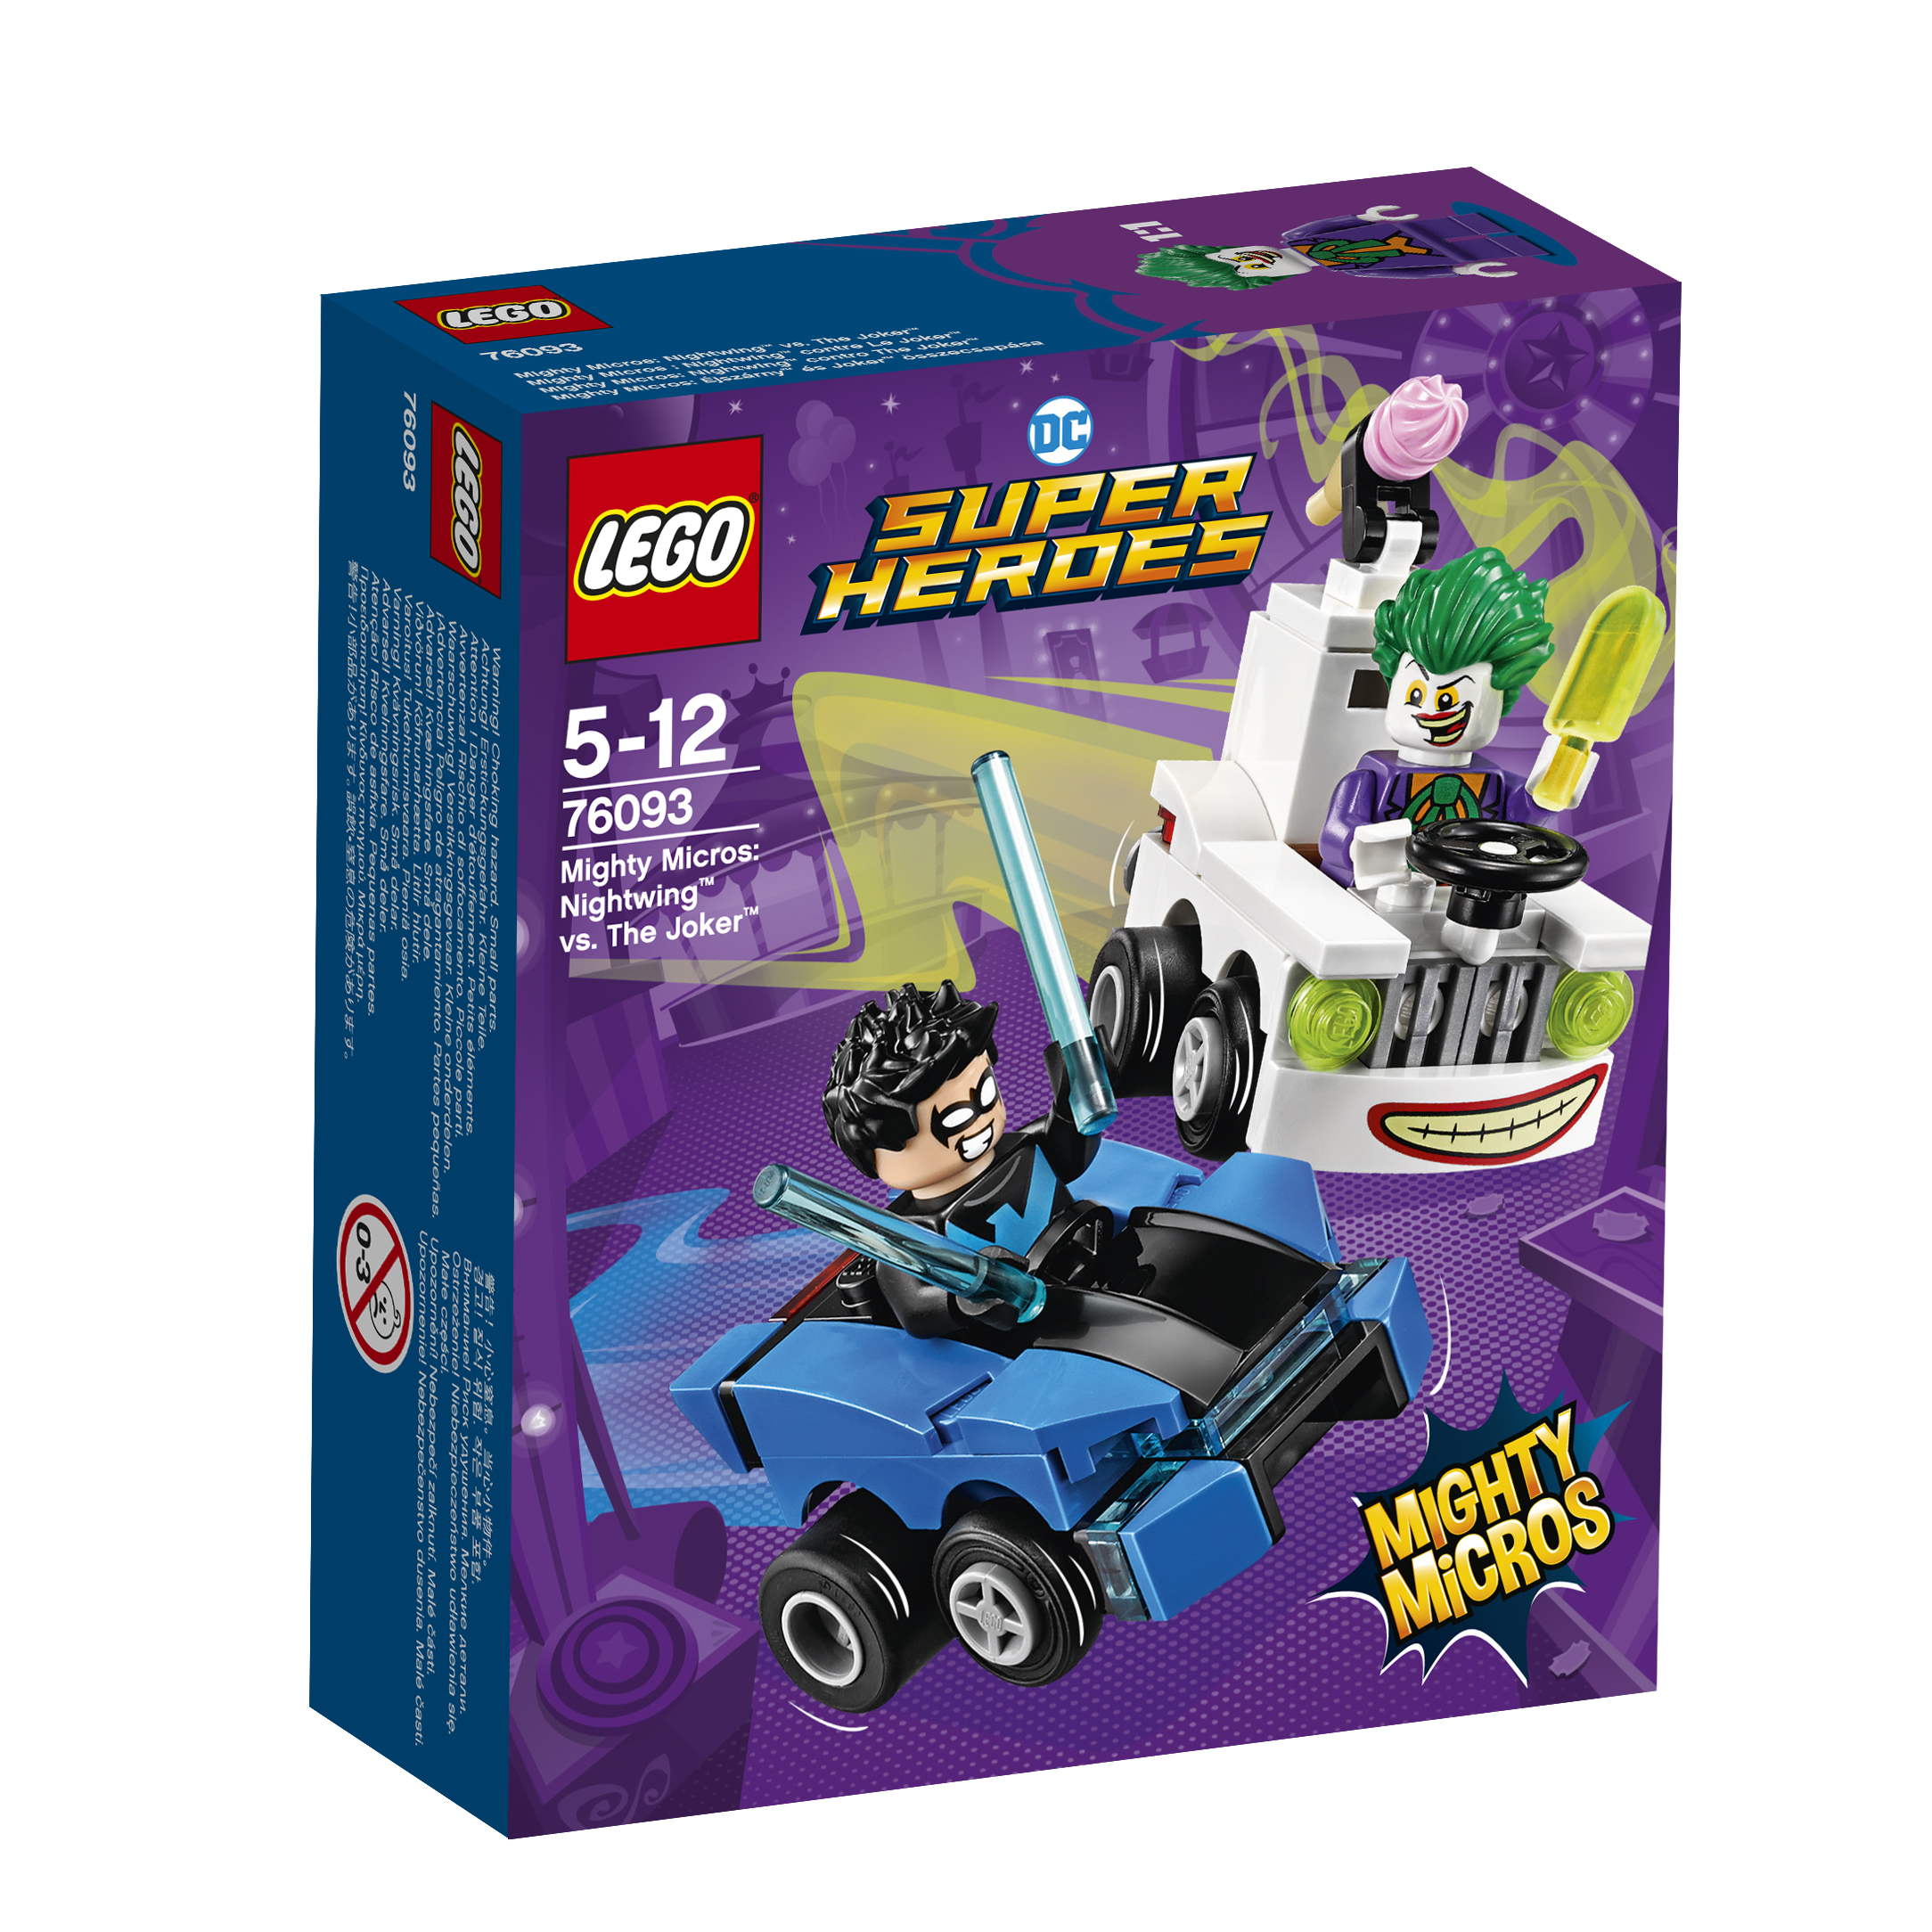 lego Super Heroes Mighty Micros: Nightwing vs. The Joker - 76093 Help Nightwing het ijsje van de Joker af te pakken